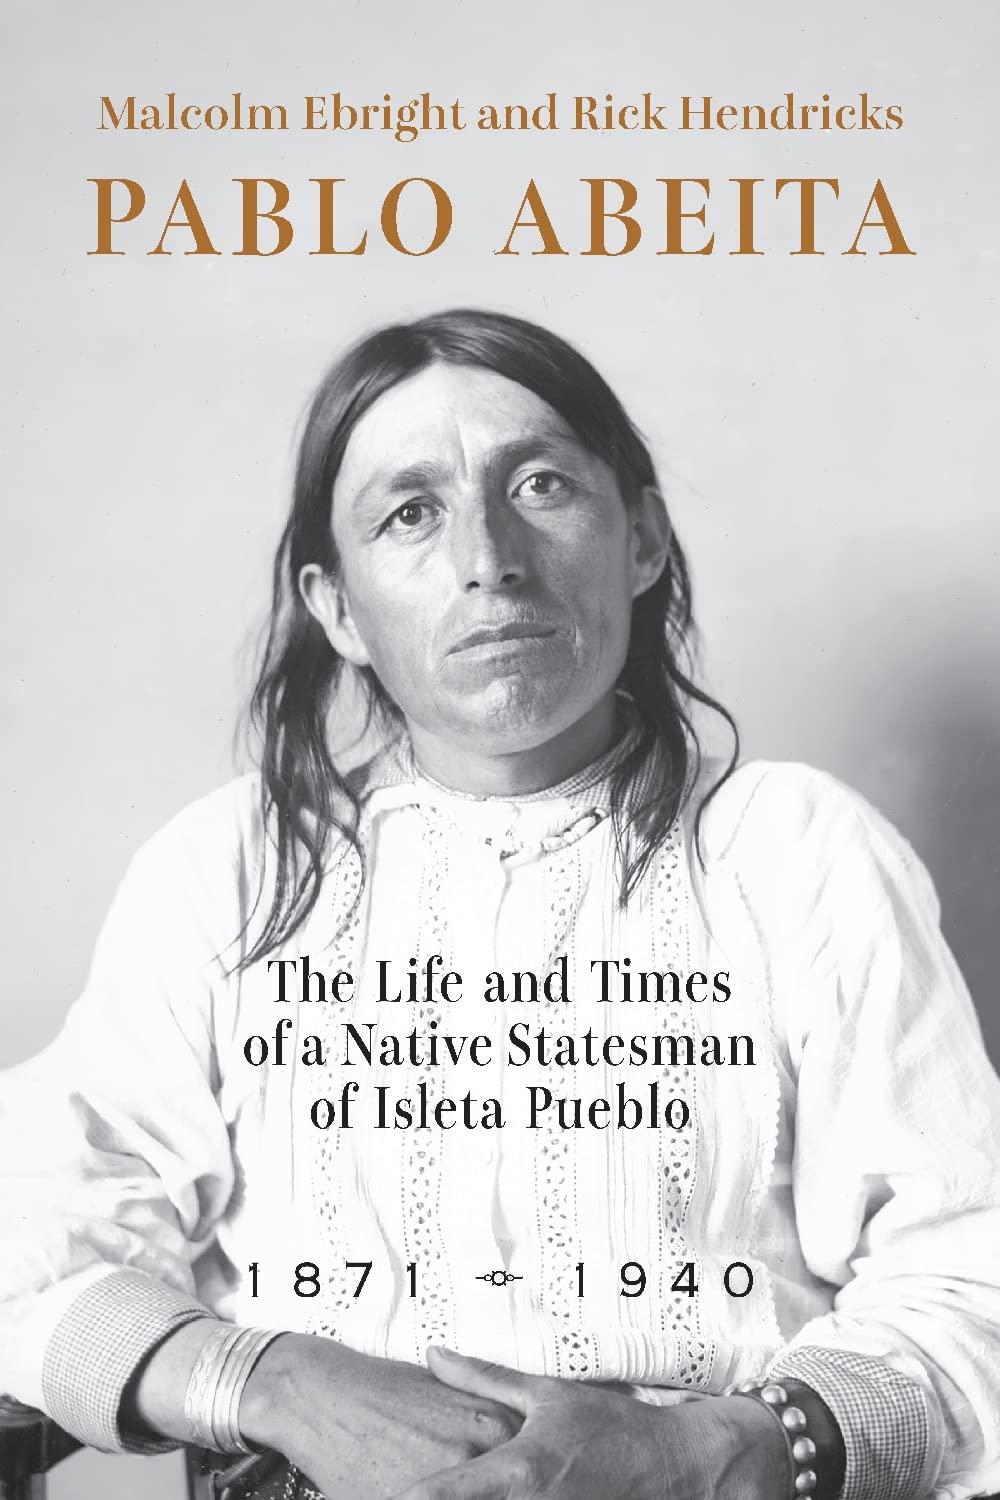 Pablo Abeita: The Life and Times of a Native Statesman of Isleta Pueblo by Malcolm Ebright & Rick Hendricks